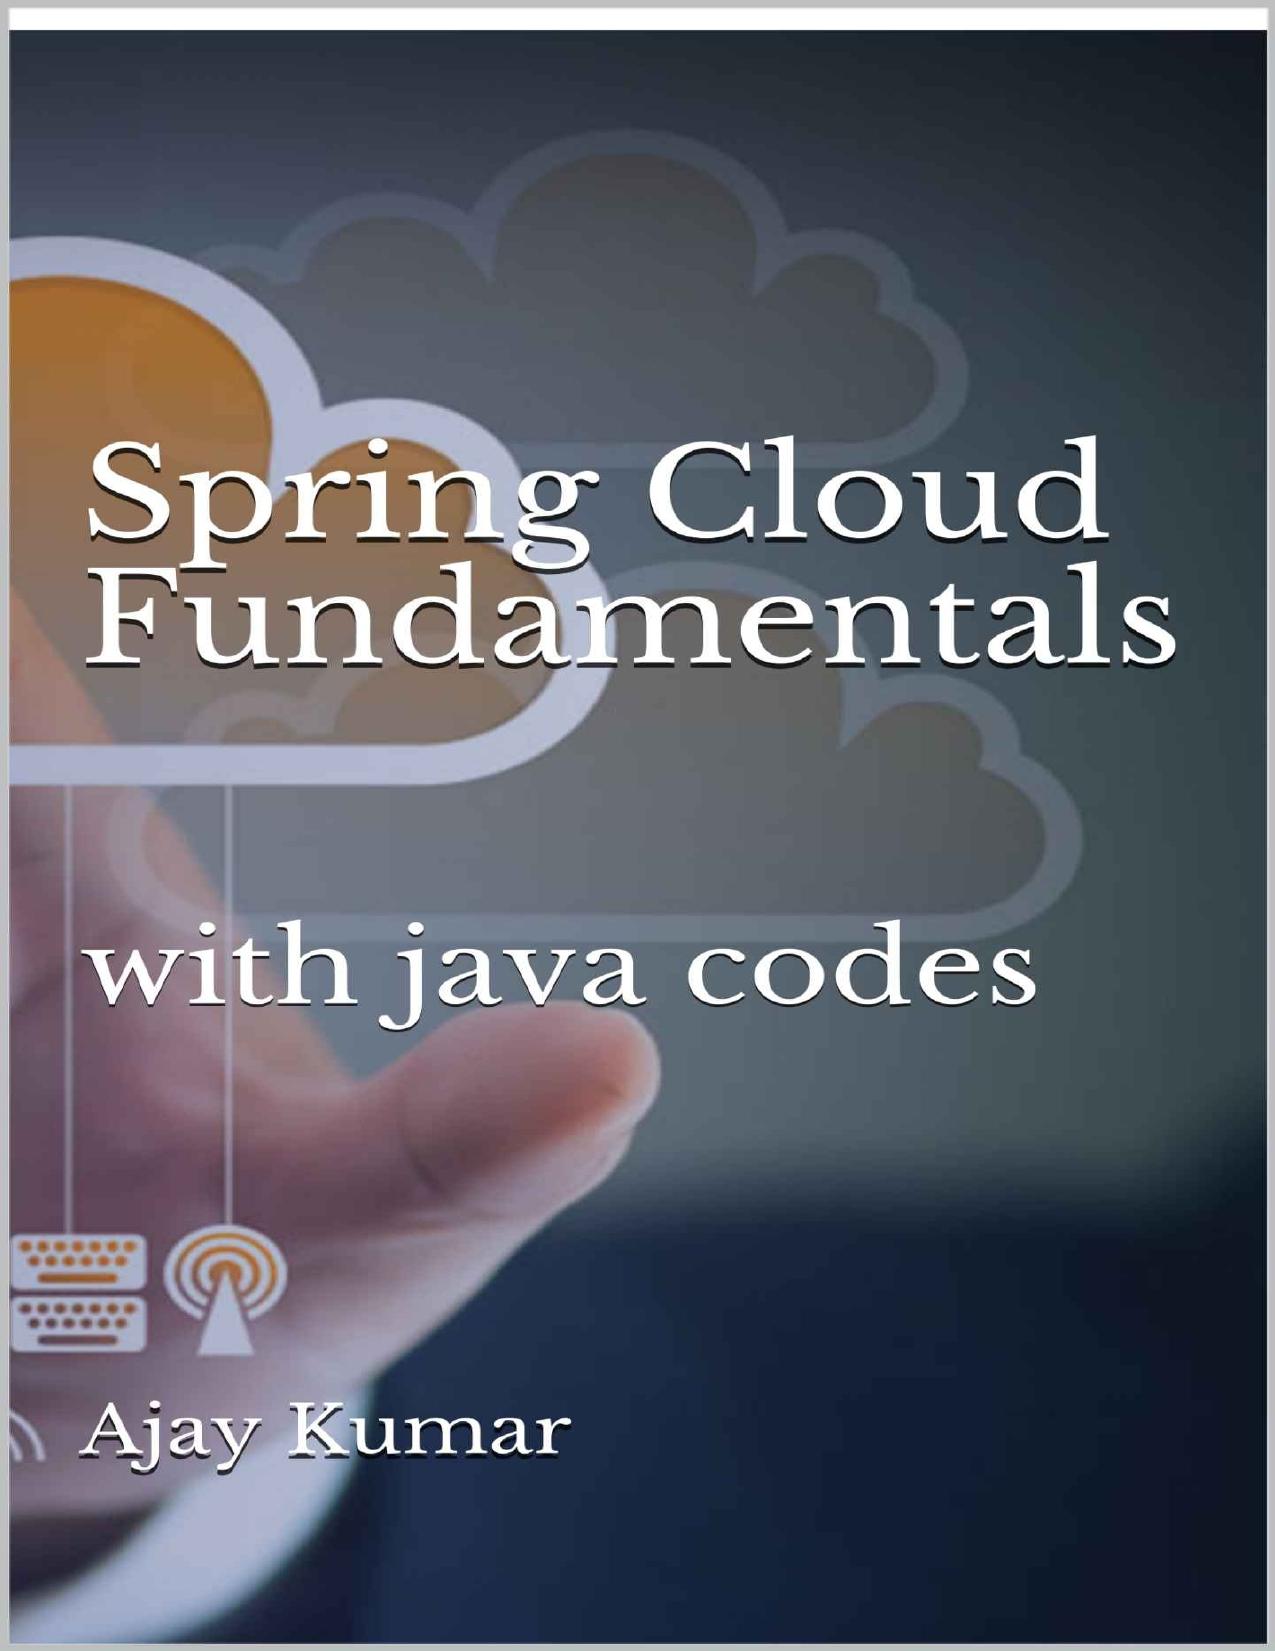 Spring Cloud Fundamentals: with java codes by Ajay Kumar